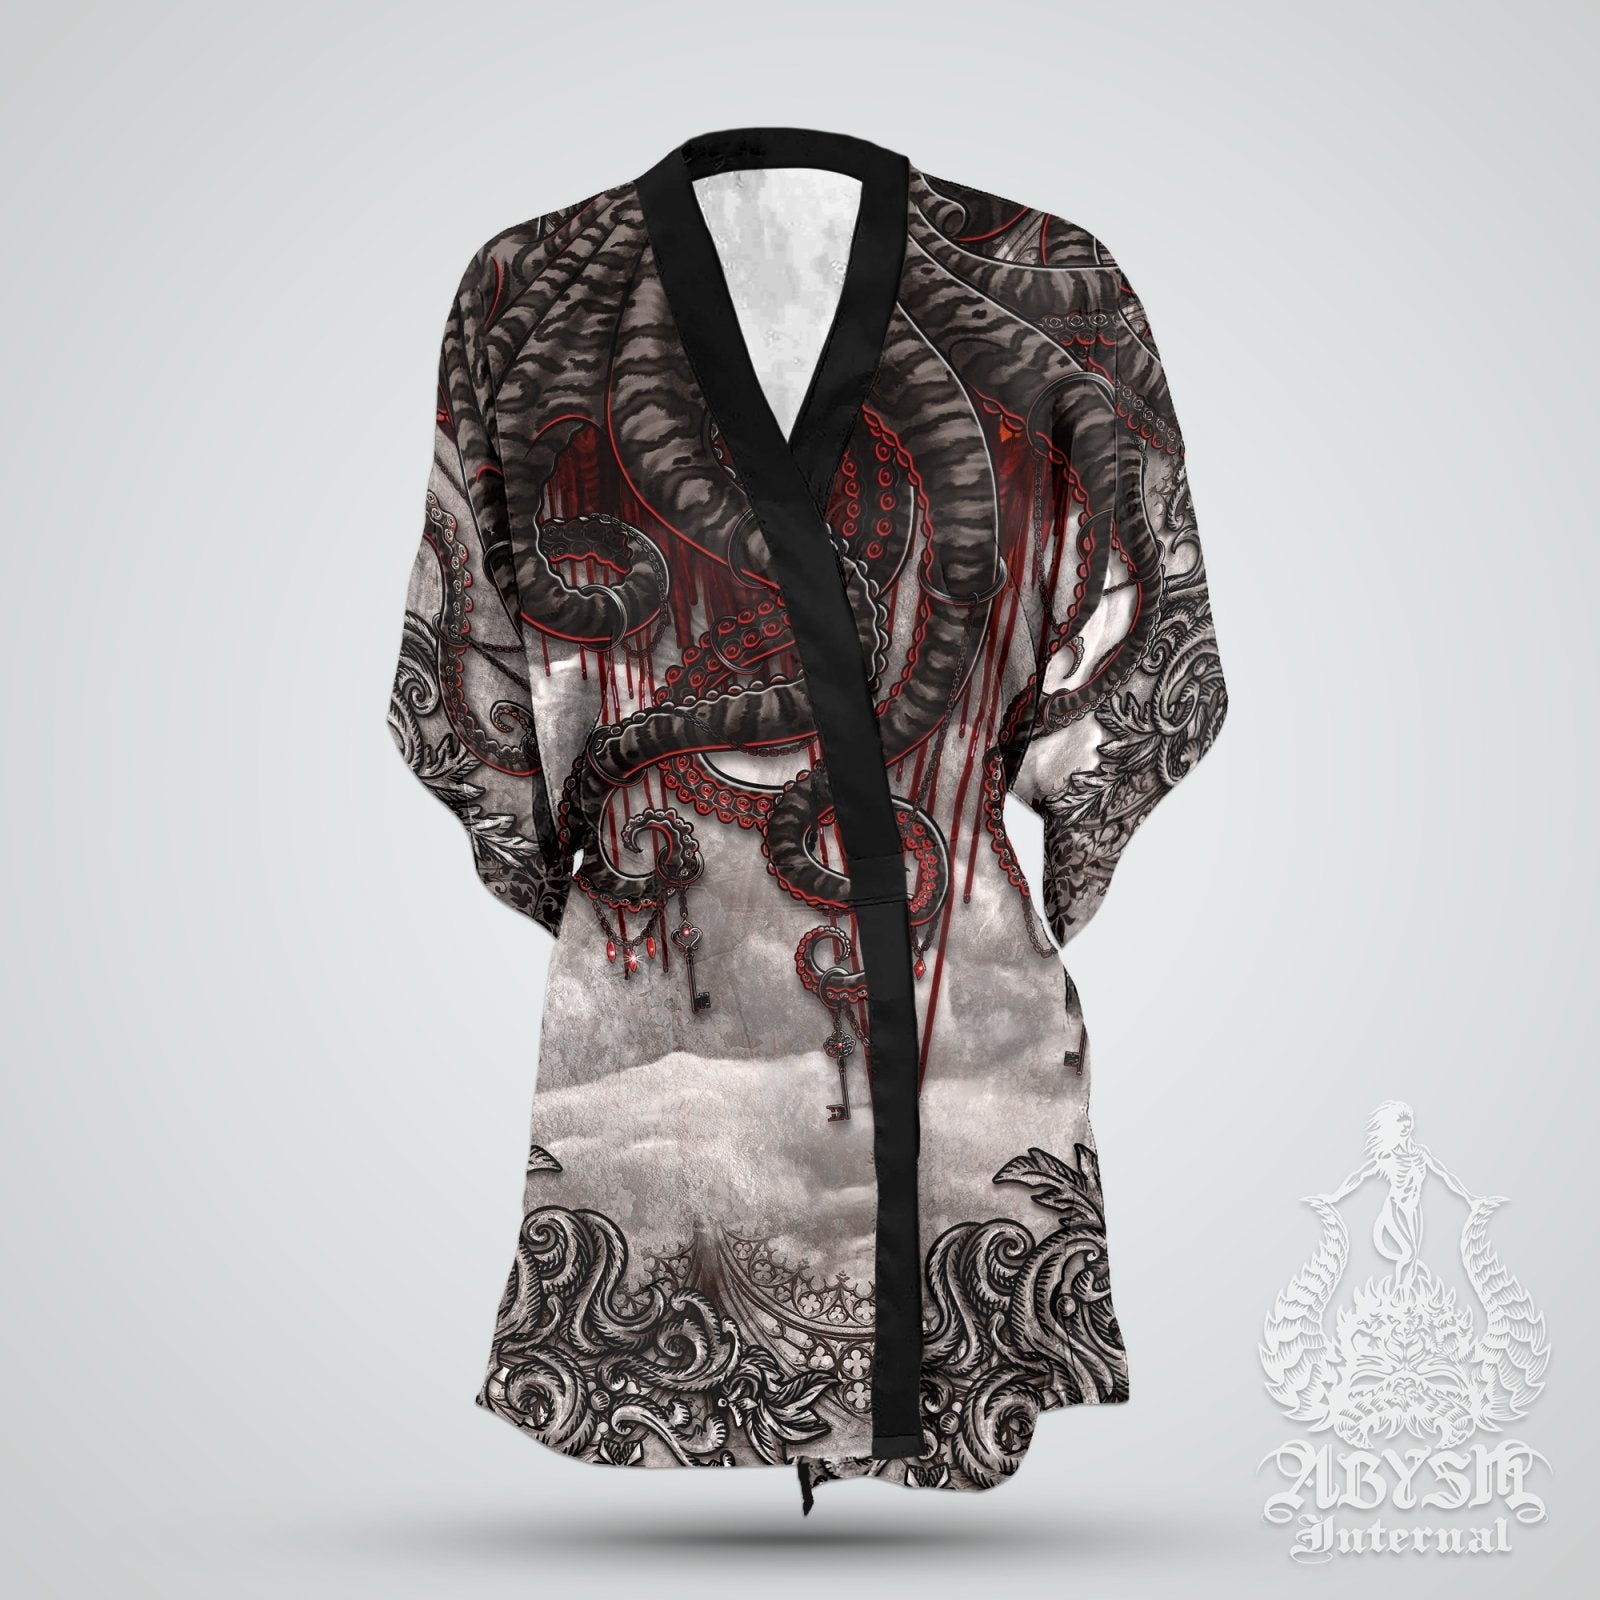 Gothic Kimono, Dressing Robe, Octopus Open Shirt, Beach Festival Outfit, Alternative Clothing, Summer Streetwear, Unisex - Horror Grey - Abysm Internal